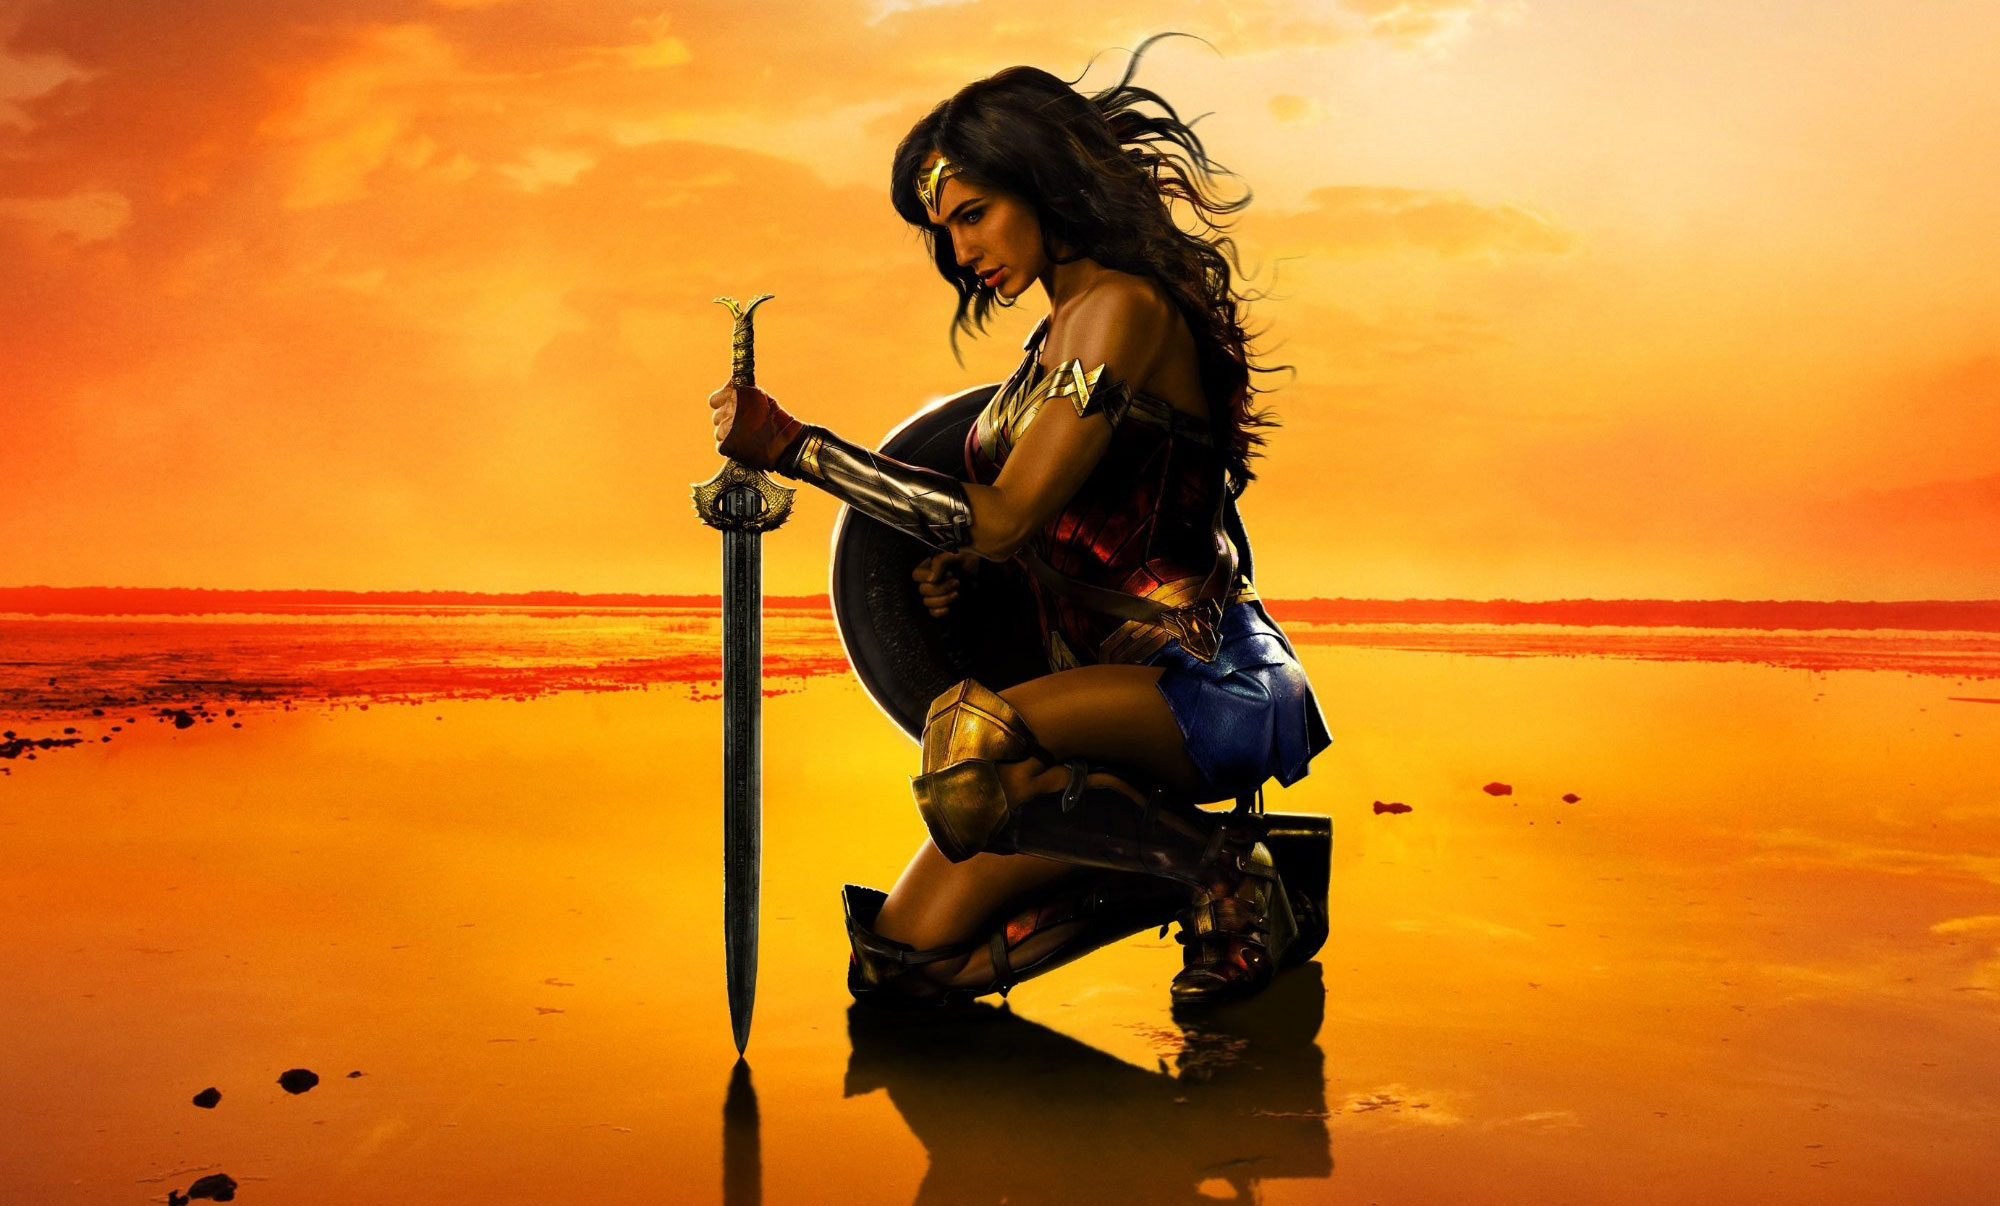 Wonder Woman banner